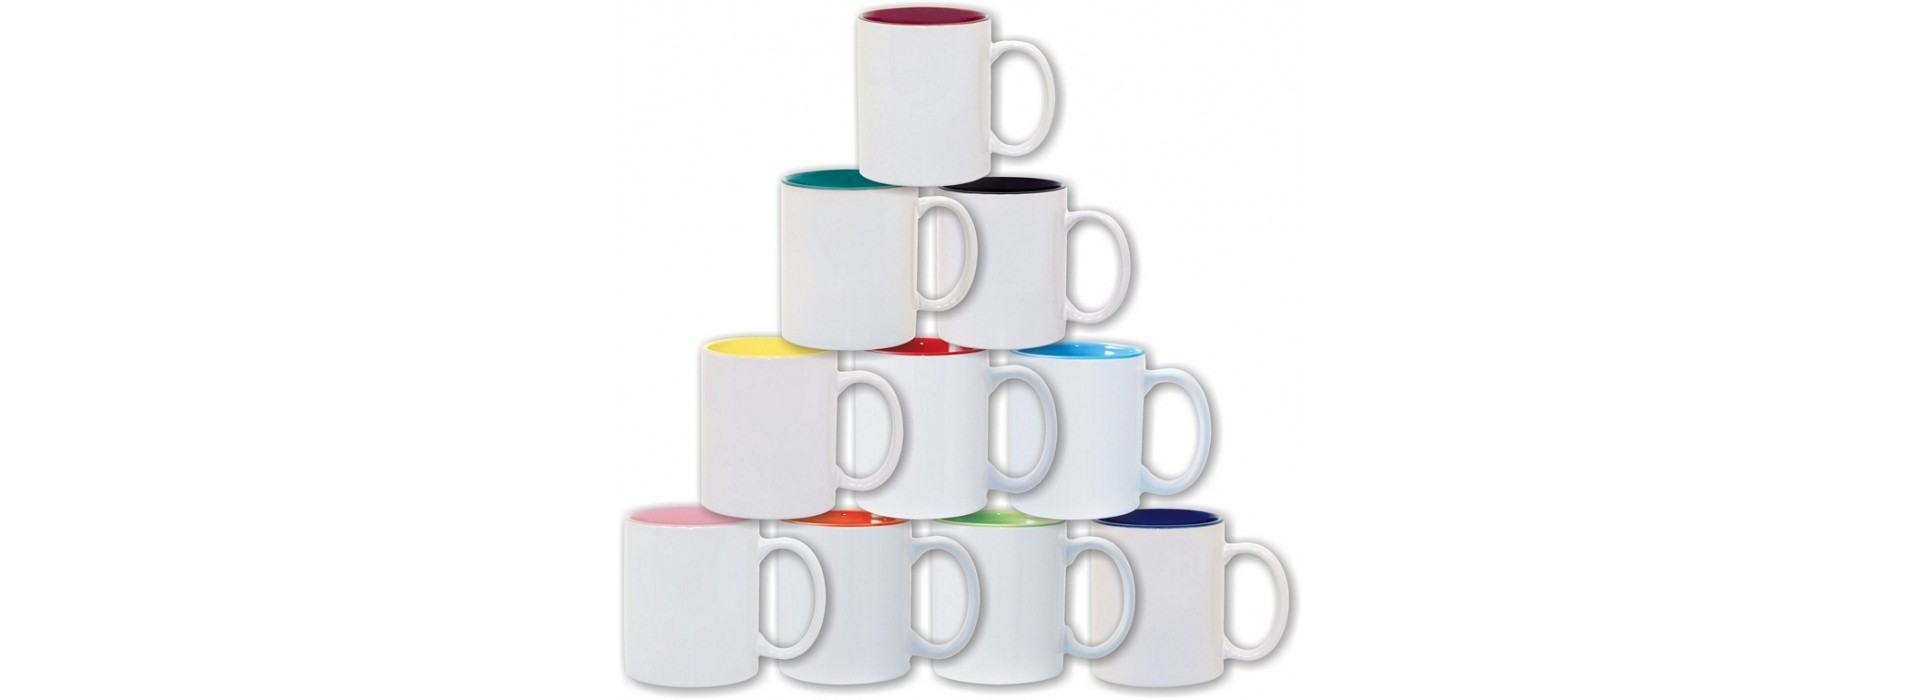 Color interior mugs